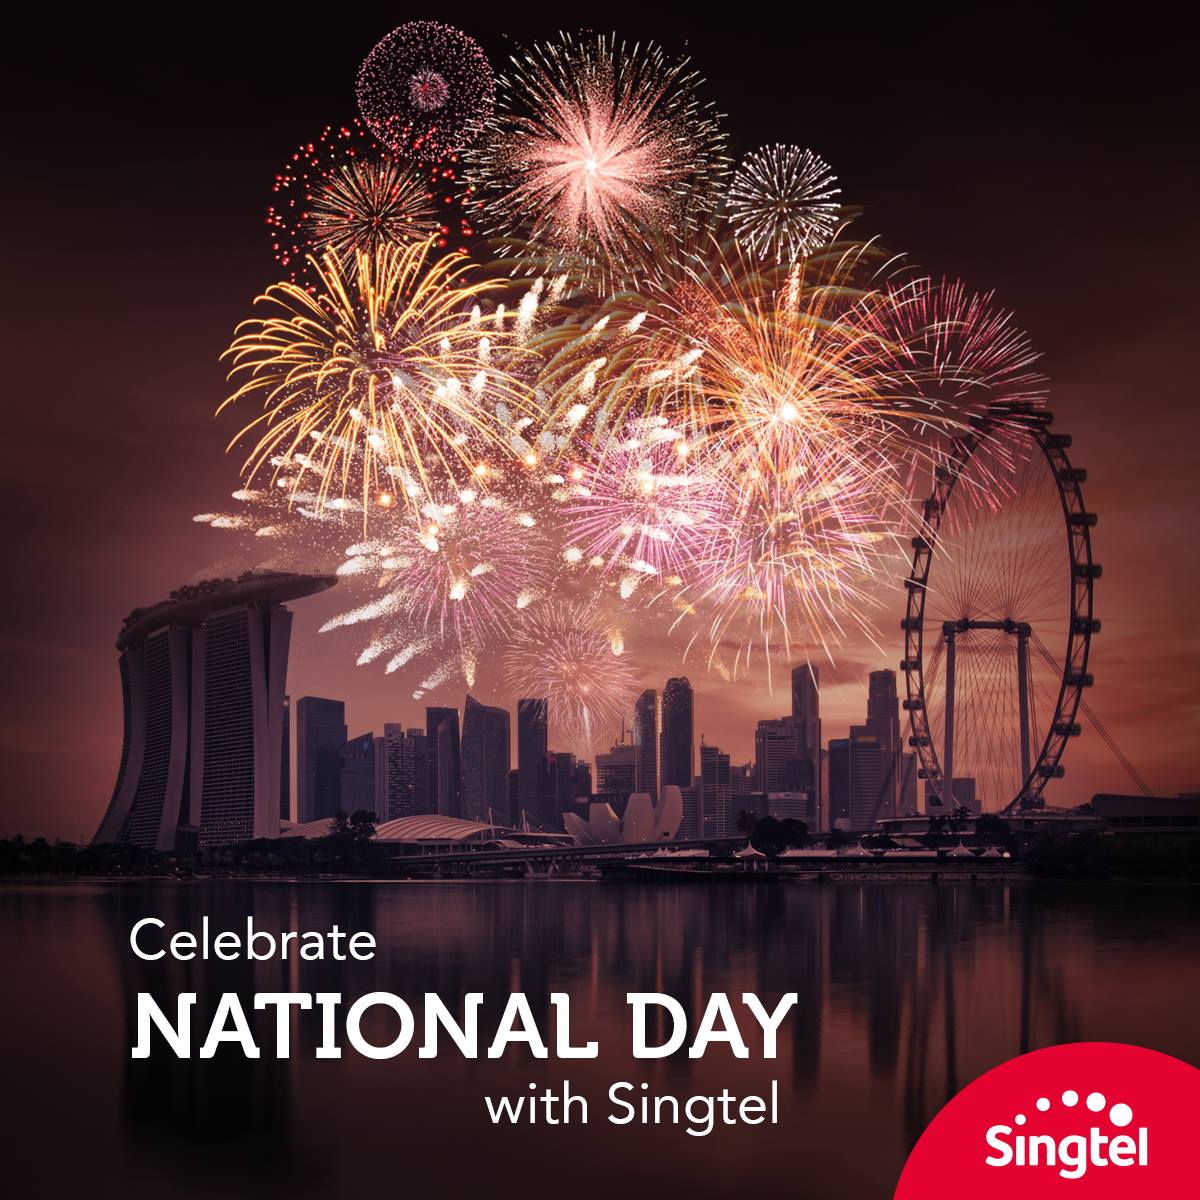 Singtel FREE Mobile Data National Day Singapore Promotion 9 Aug 2016